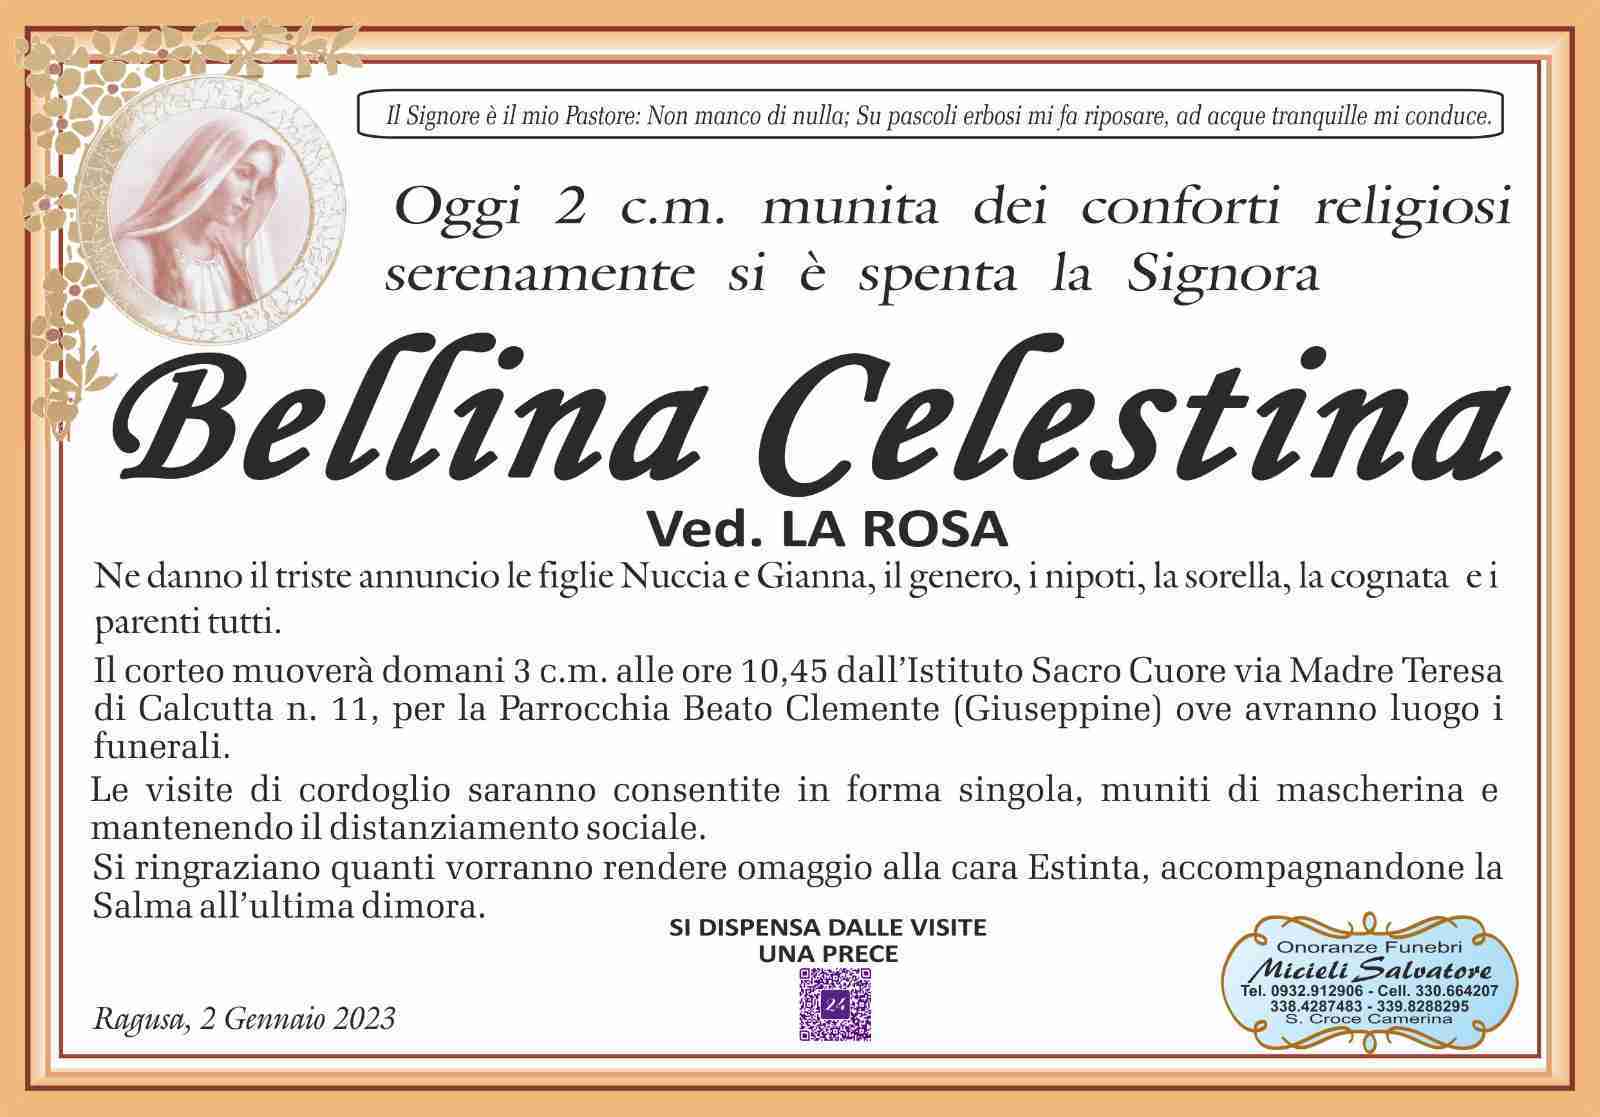 Celestina Bellina